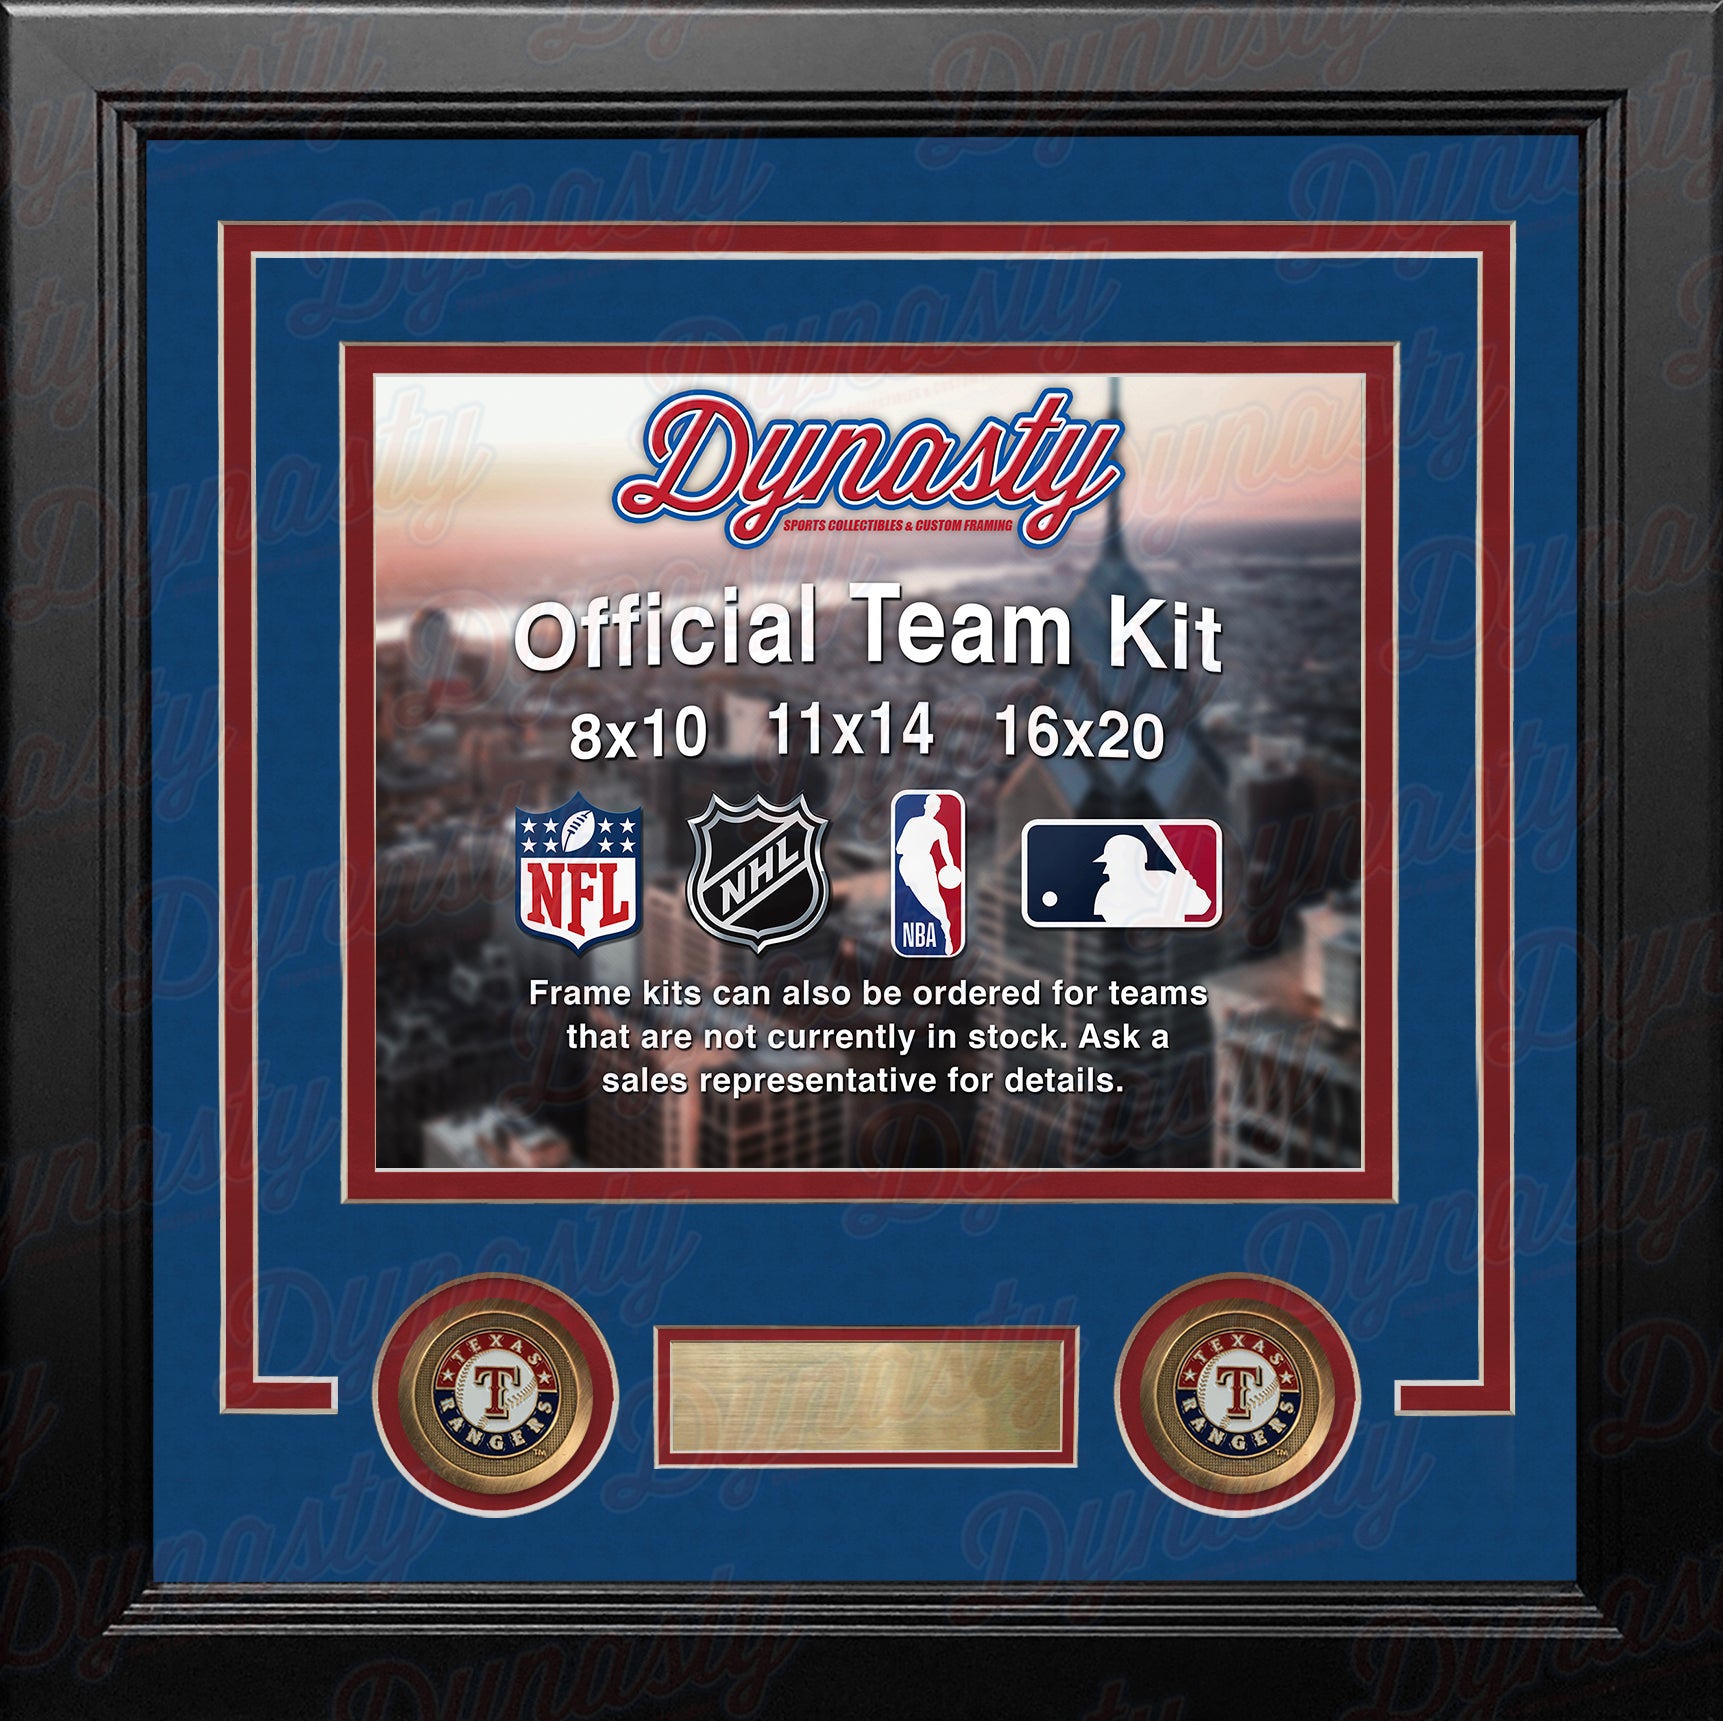 MLB Baseball Photo Picture Frame Kit - Texas Rangers (Blue Matting, Red Trim) - Dynasty Sports & Framing 